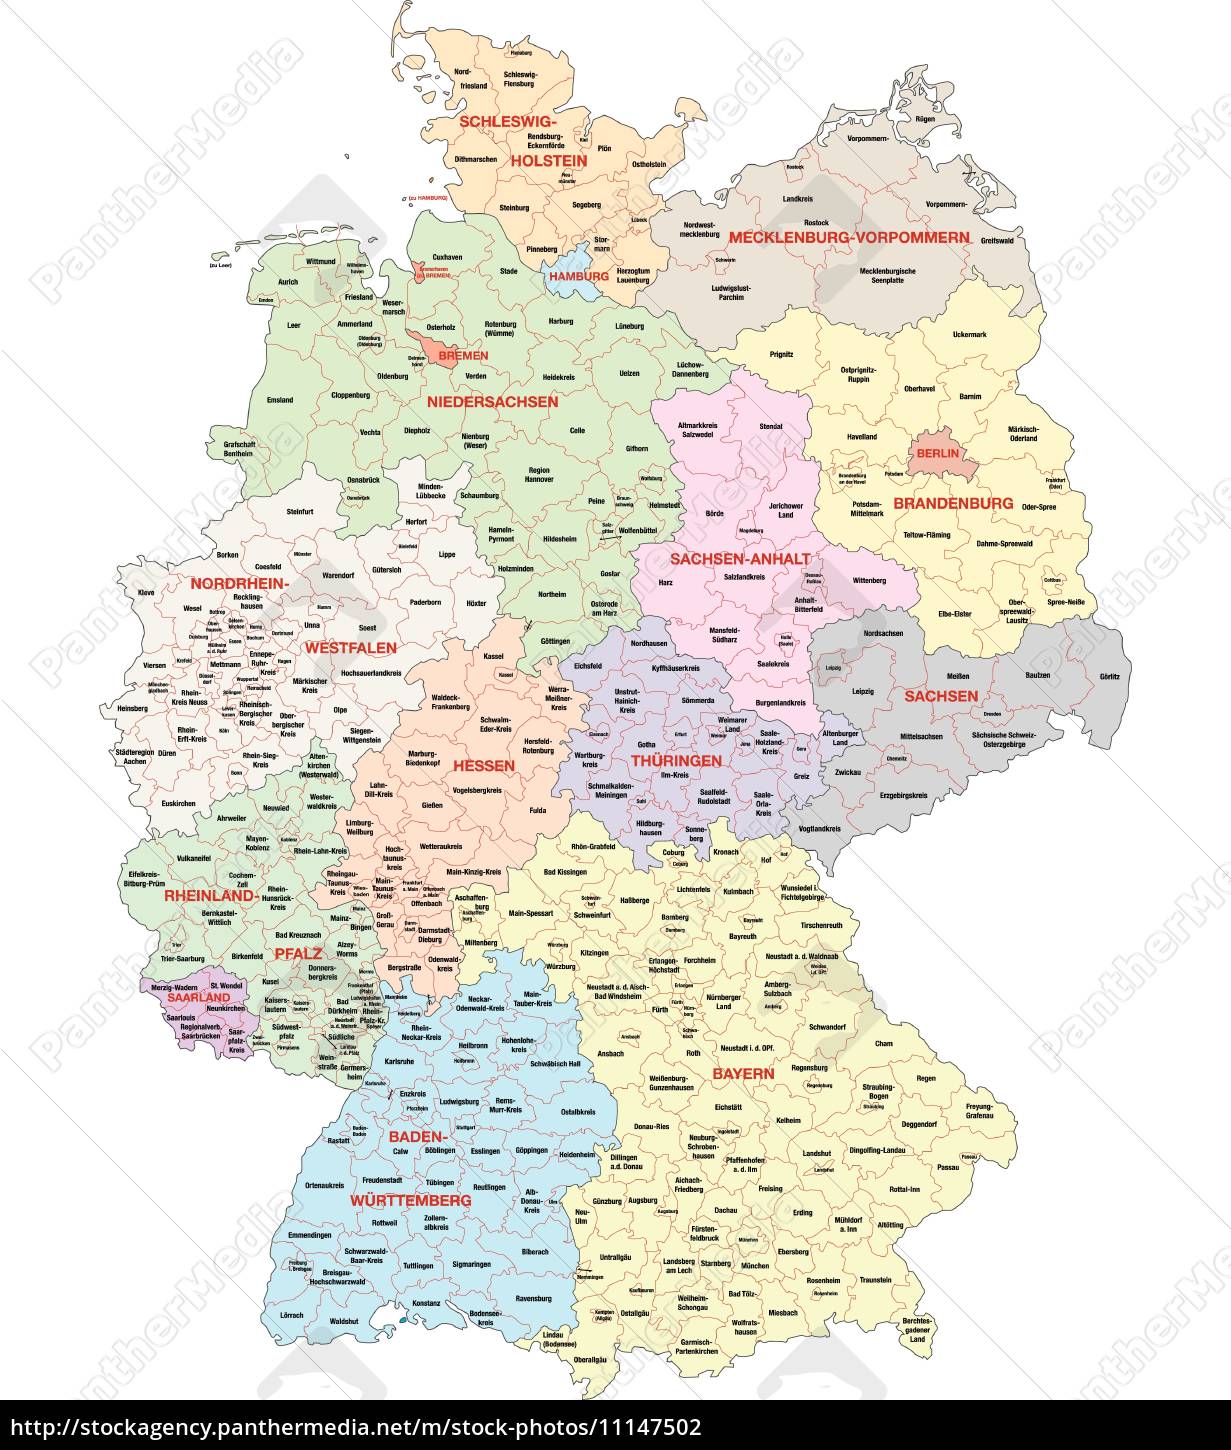 Kort Over Tyskland administrativ kort over tyskland   Stockphoto   #11147502  Kort Over Tyskland